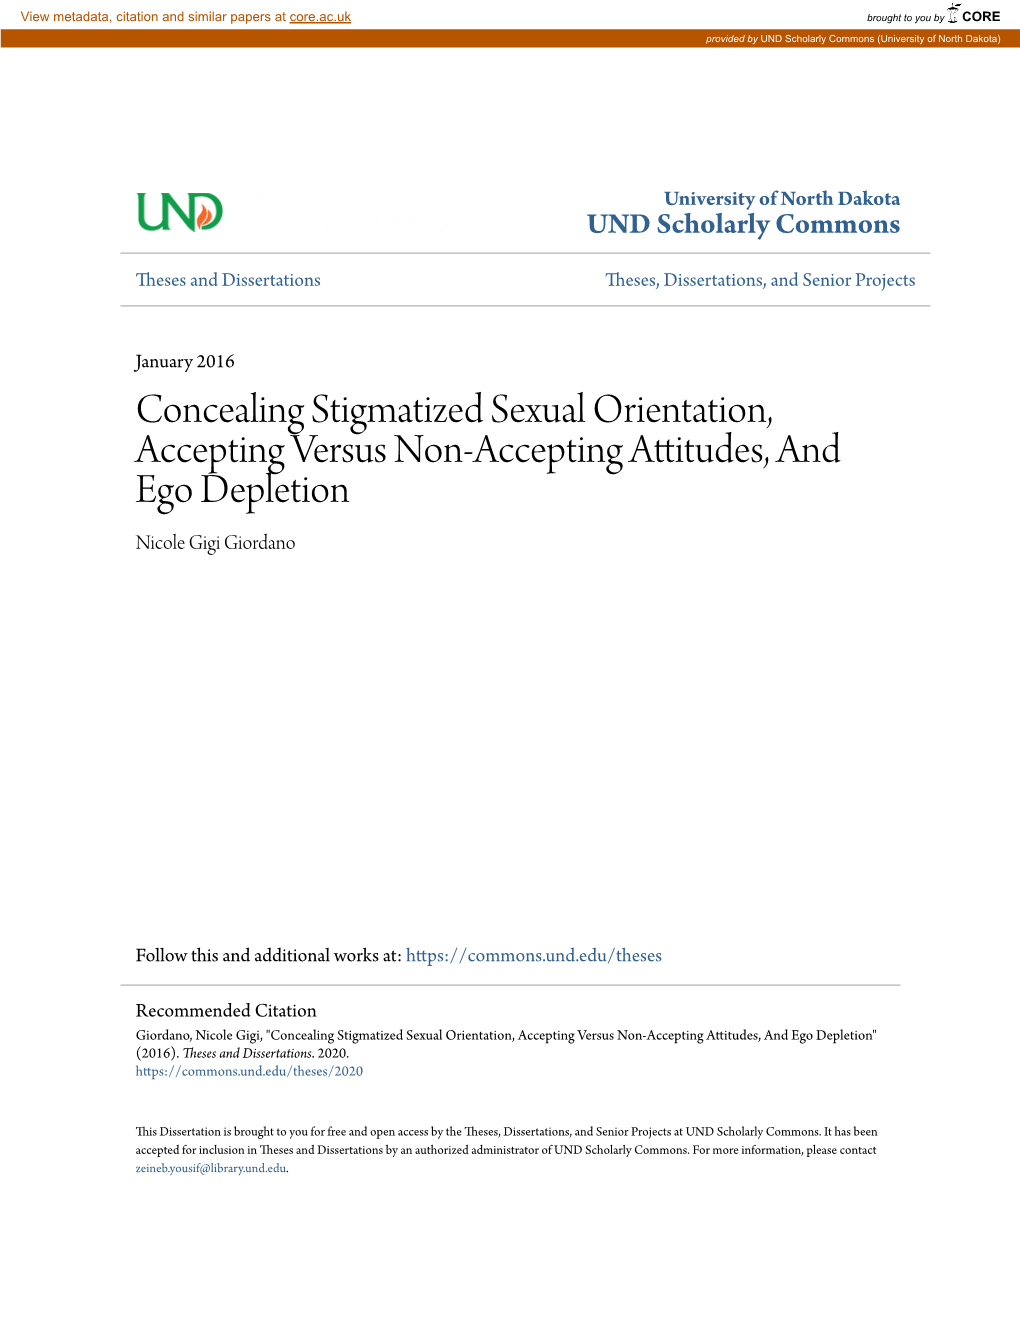 Concealing Stigmatized Sexual Orientation, Accepting Versus Non-Accepting Attitudes, and Ego Depletion Nicole Gigi Giordano